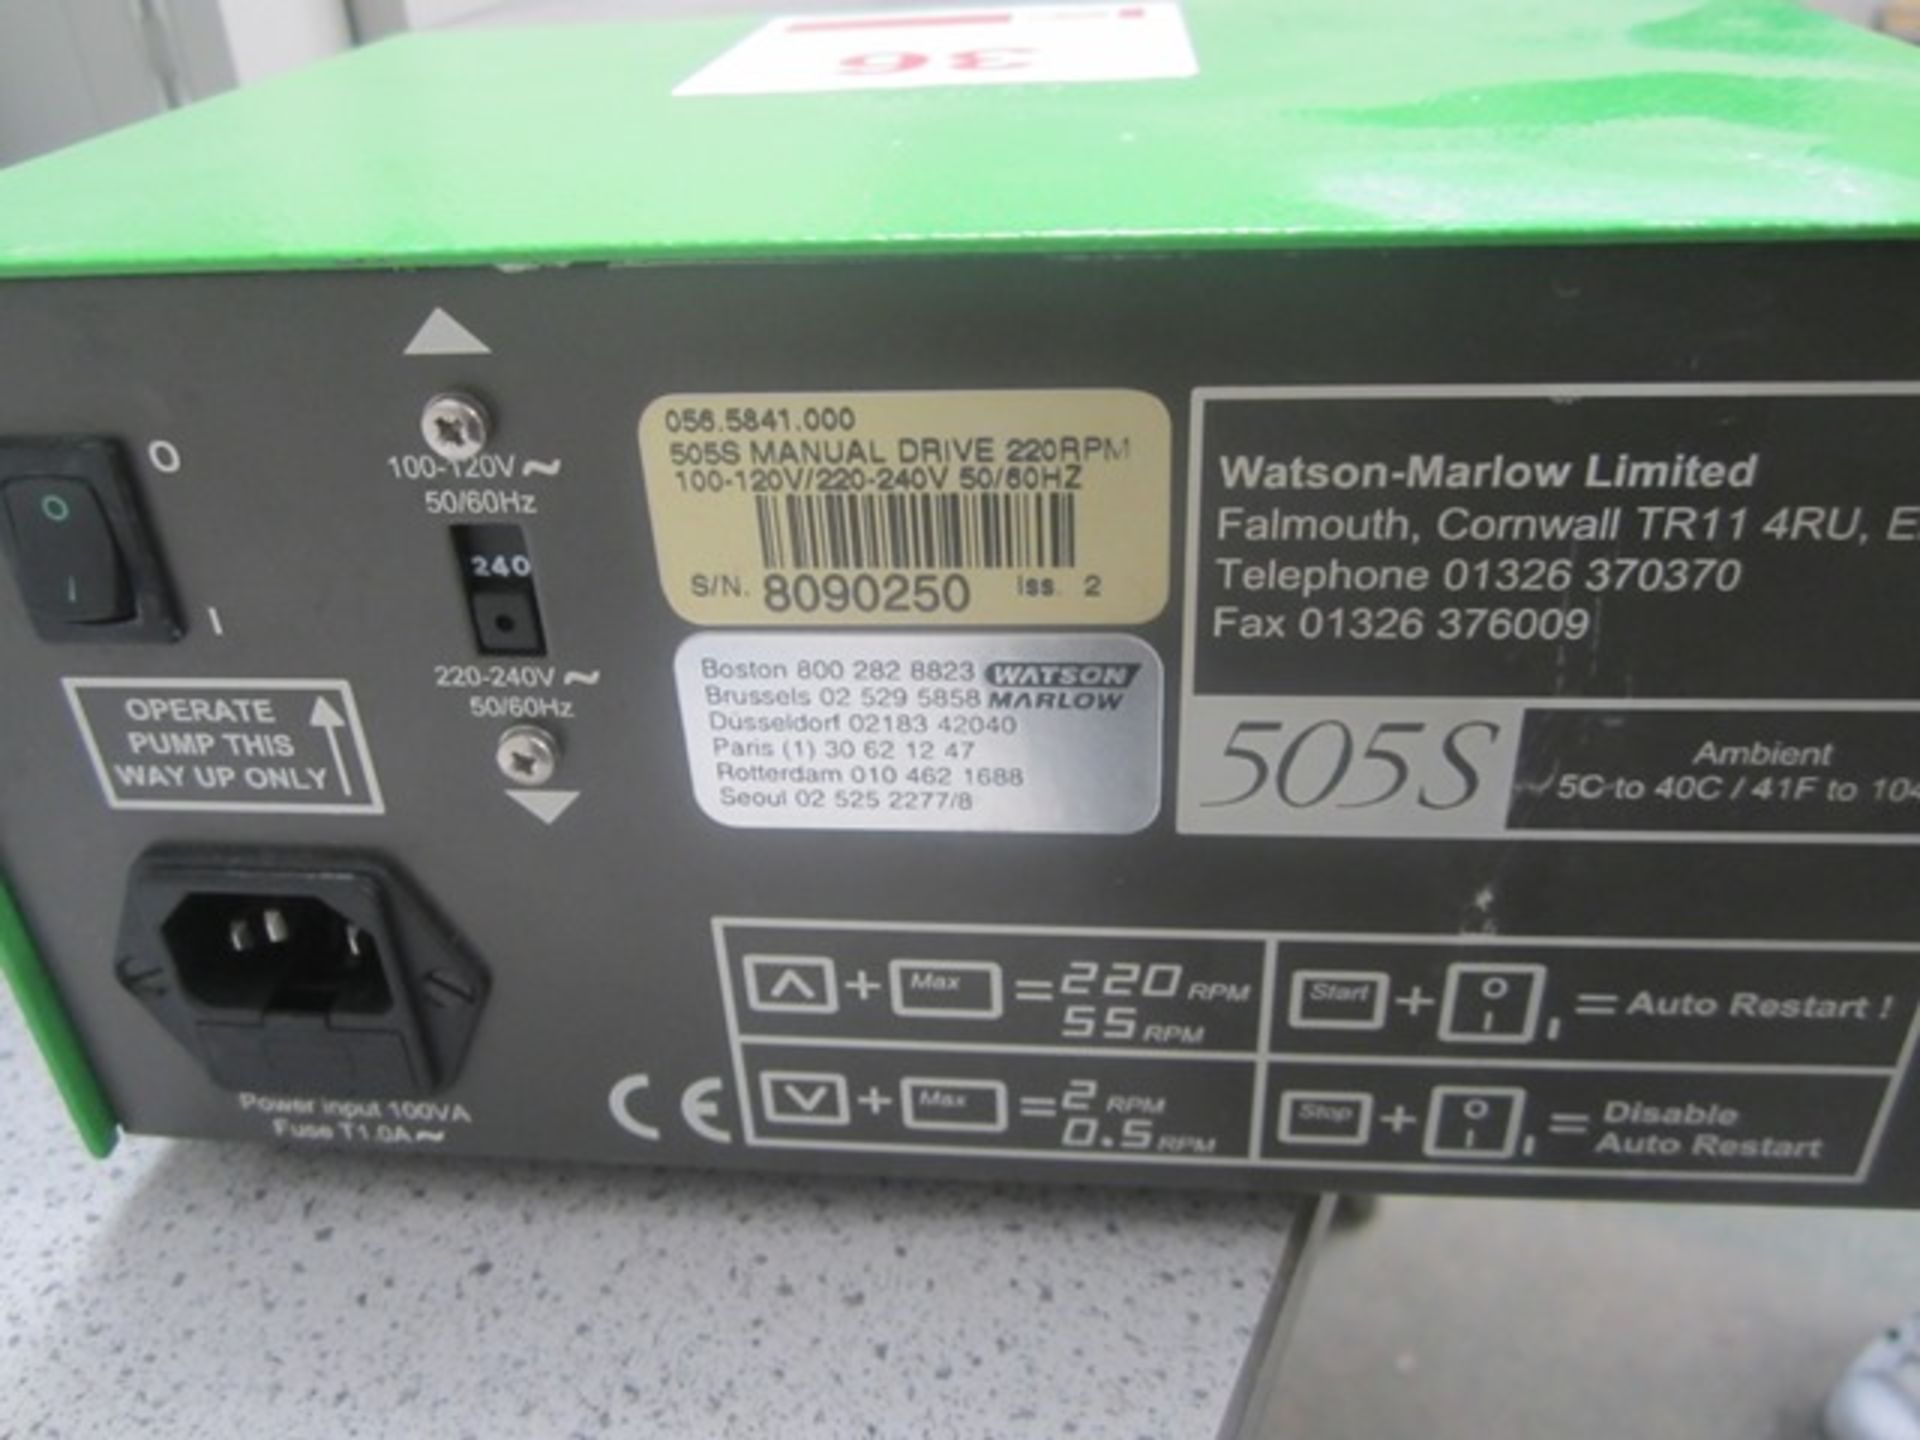 Watson Marlow 505S Peristaltic pump, serial number 8090250 - Image 3 of 3